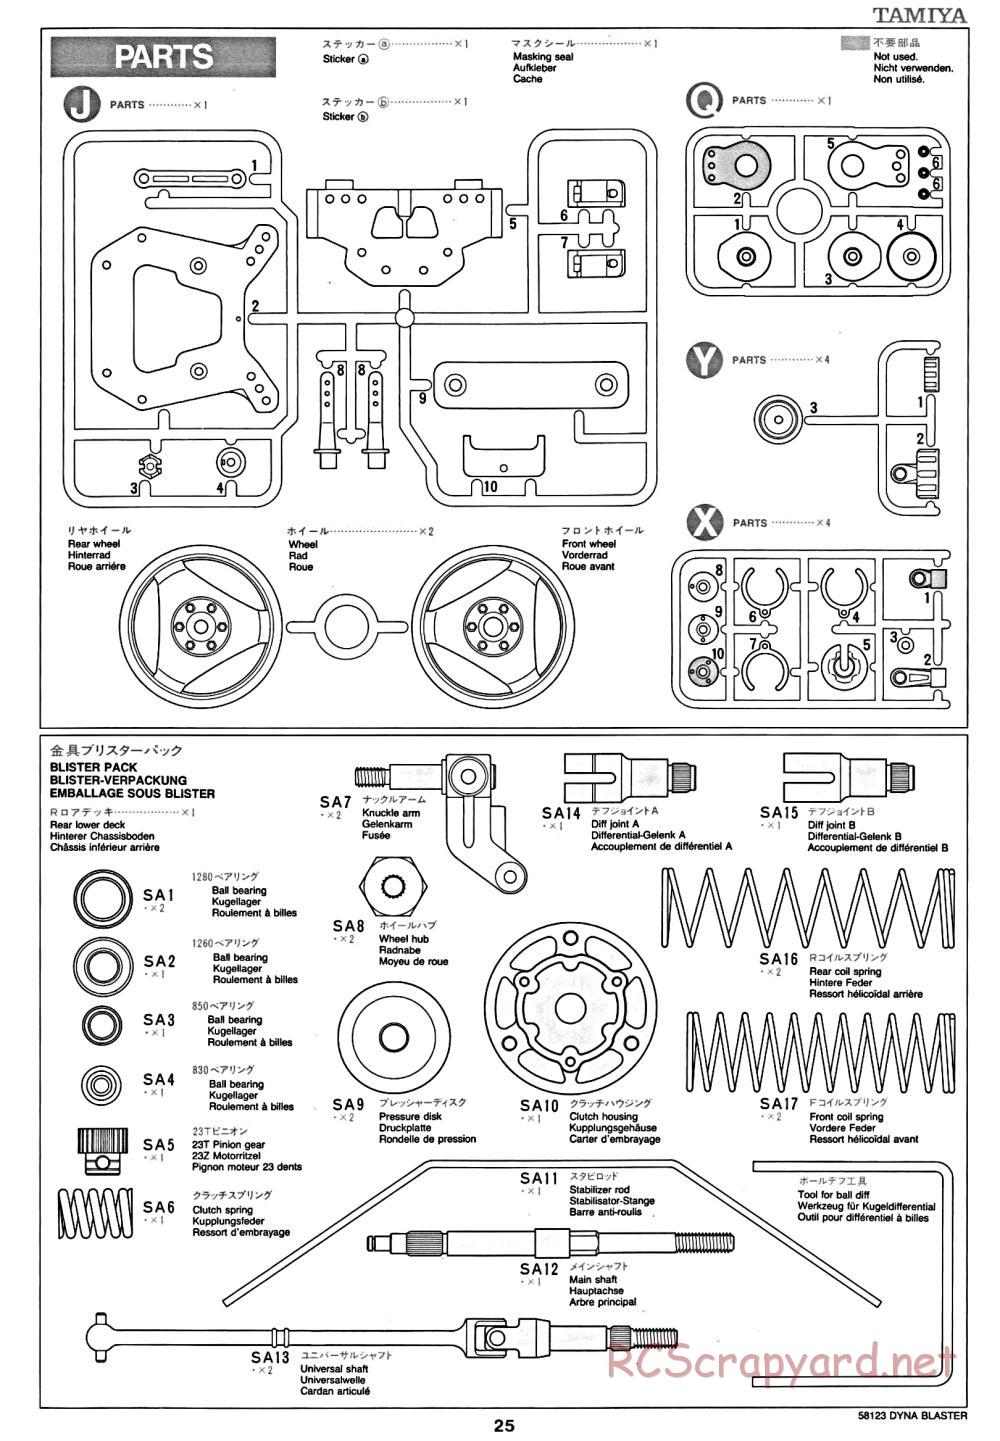 Tamiya - Dyna Blaster Chassis - Manual - Page 25